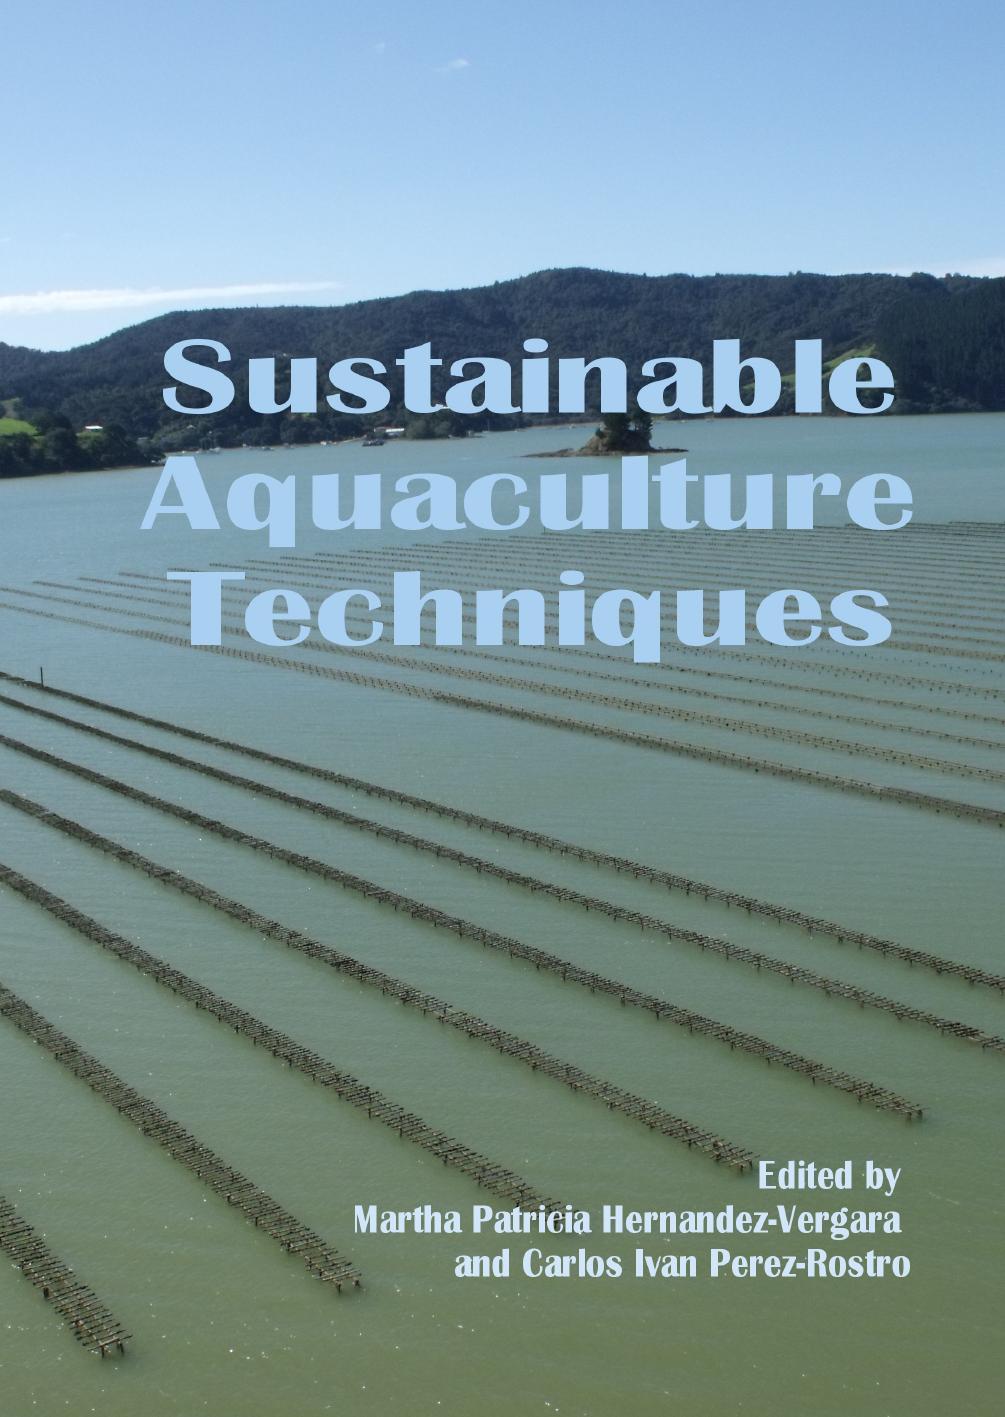 Sustainable Aquaculture Techniques 2014